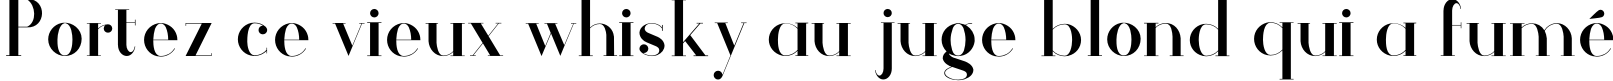 Пример написания шрифтом Athene текста на французском